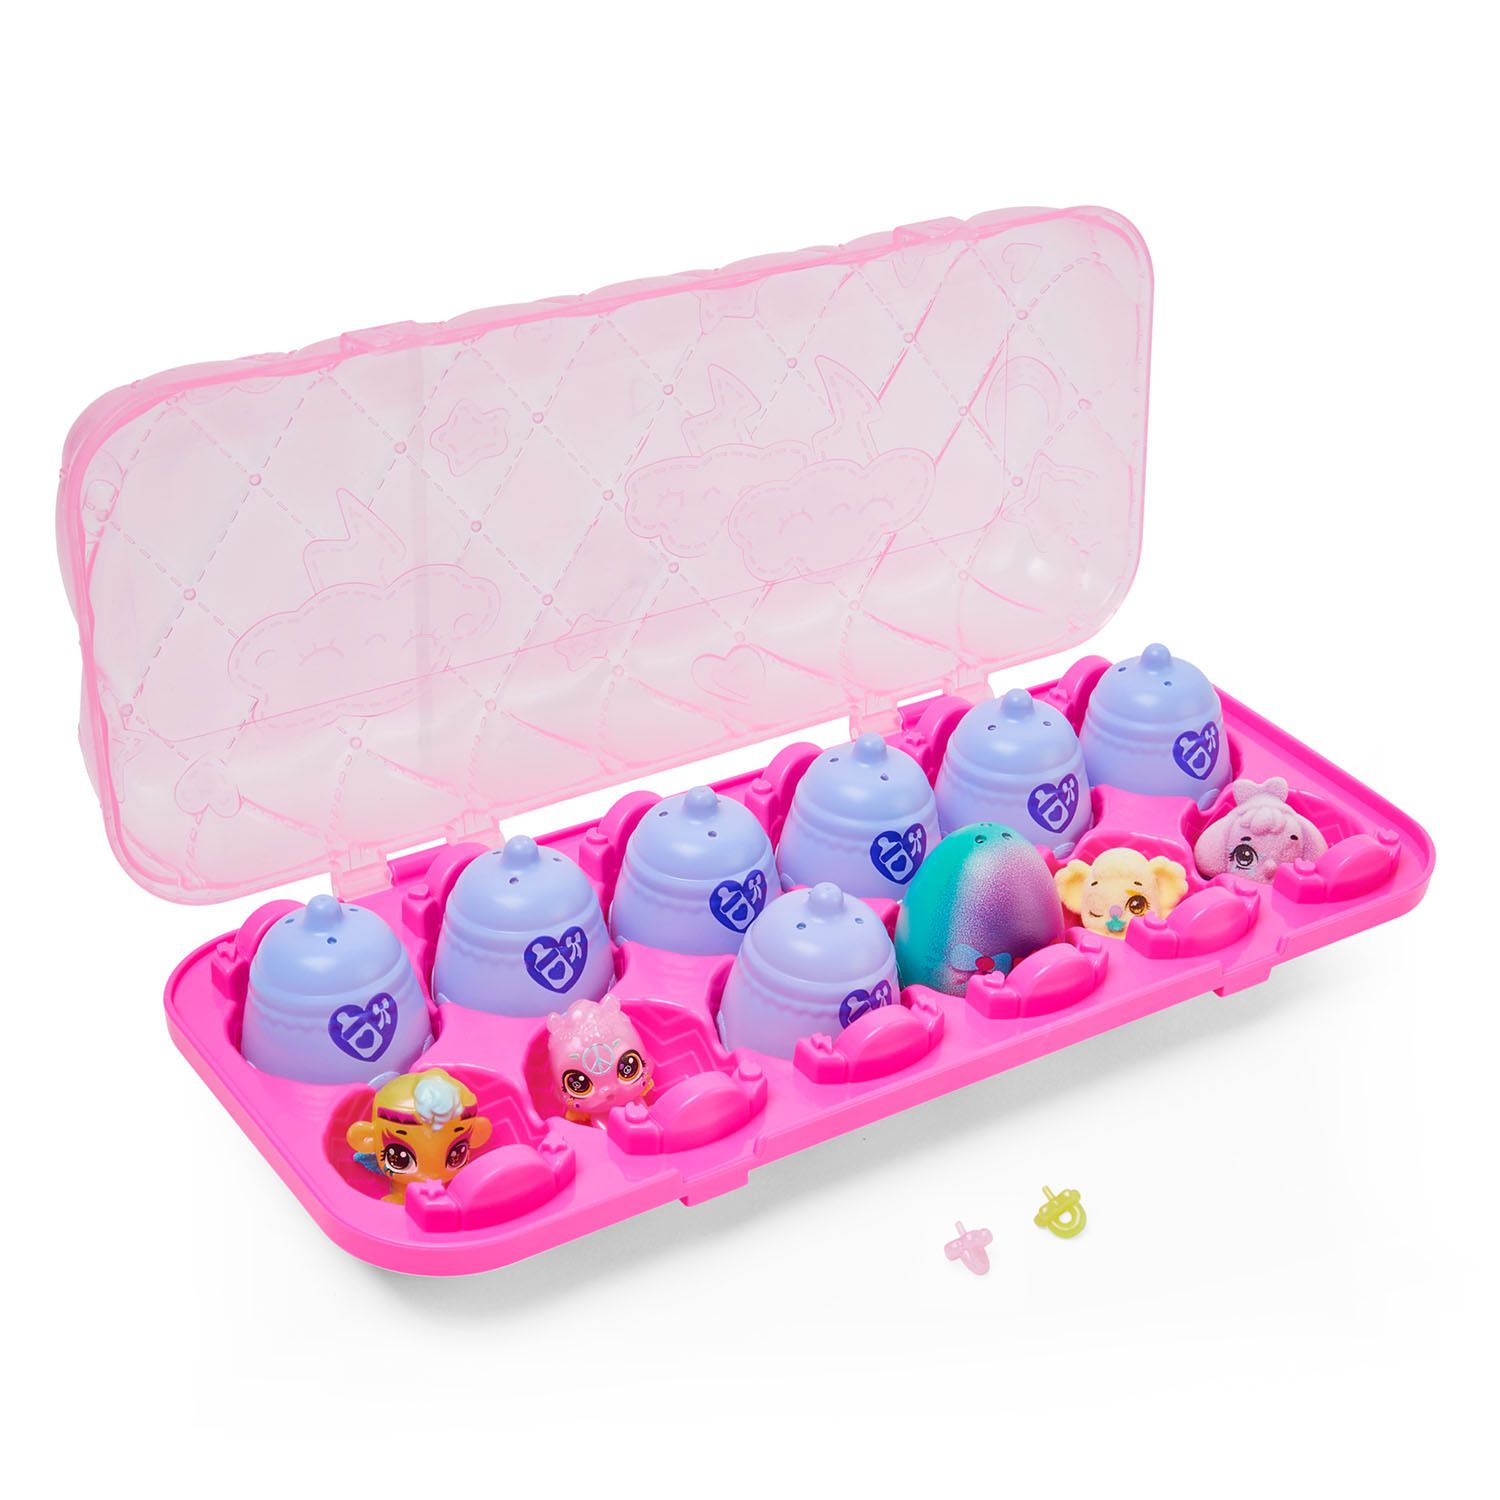 Image for Hatchimals CollEGGtibles Shimmer Babies 12-Pack Egg Carton Kids Toys at Kohl's.